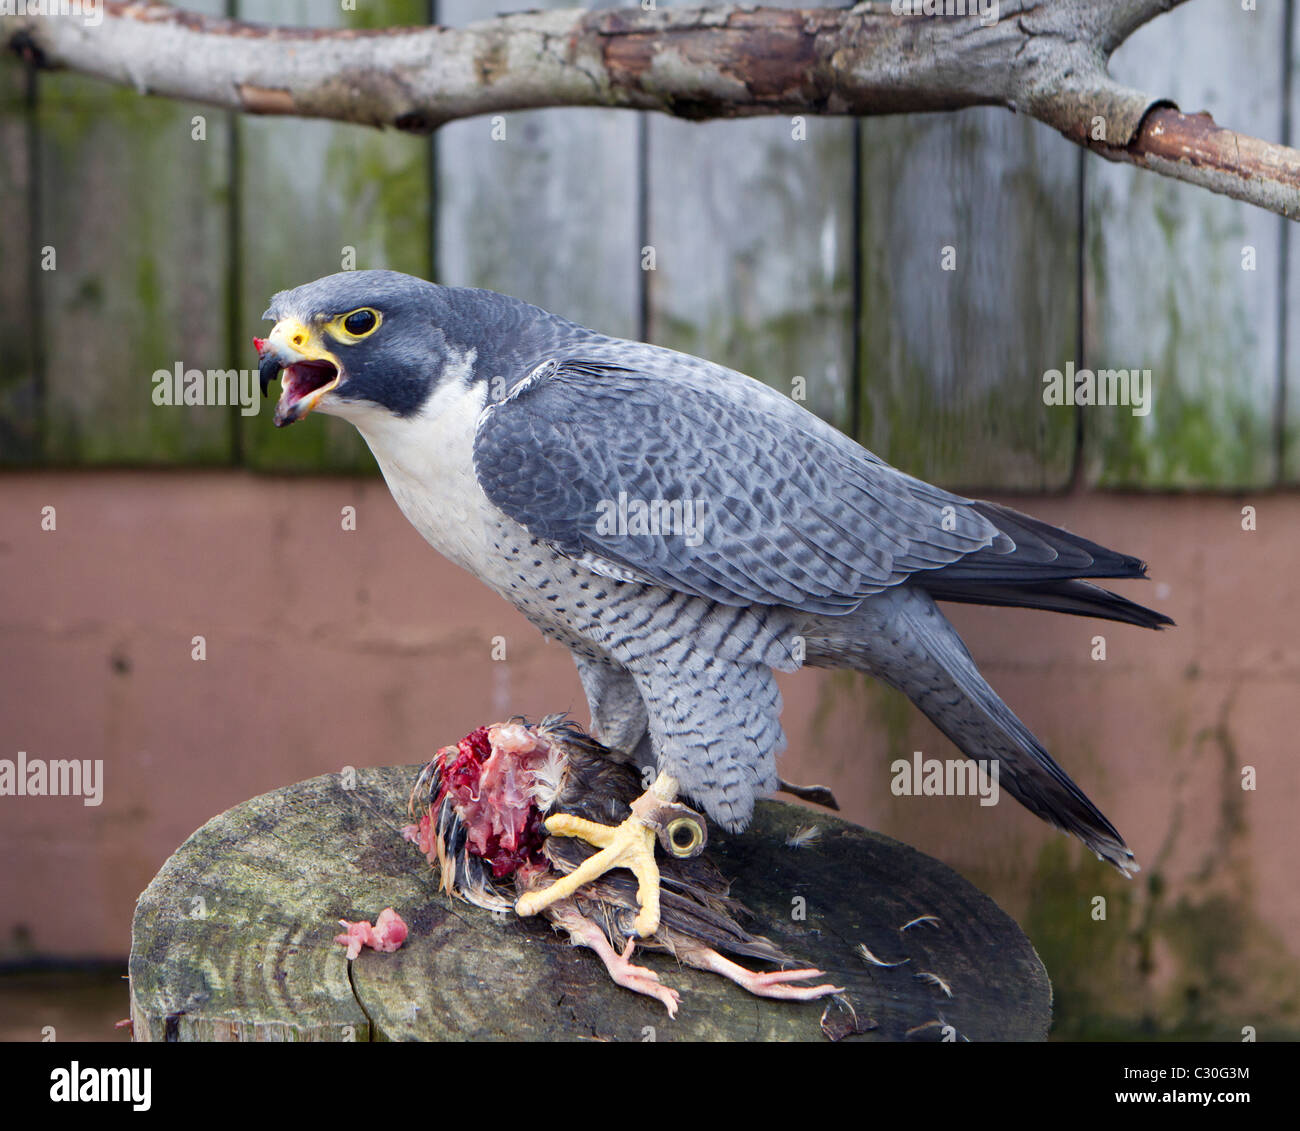 The Peregrine Falcon Falco peregrinus feeding on a freshly killed bird.  Duck Hawk. Fastest animal in the animal kingdom Stock Photo - Alamy